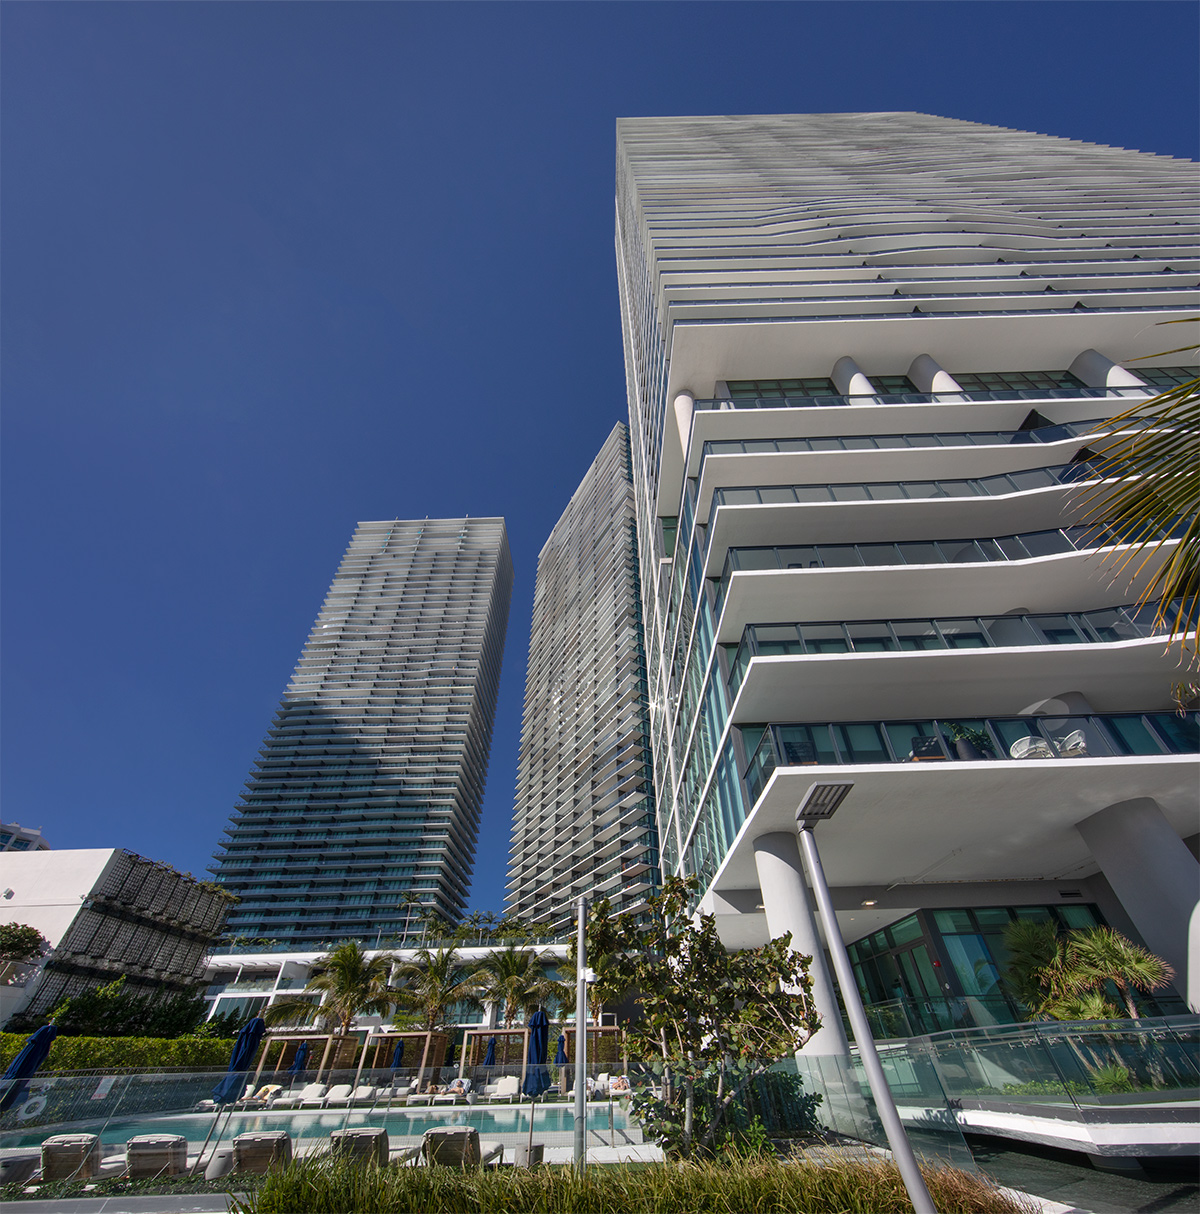 Paraiso Bay condo towers Miami pool view.